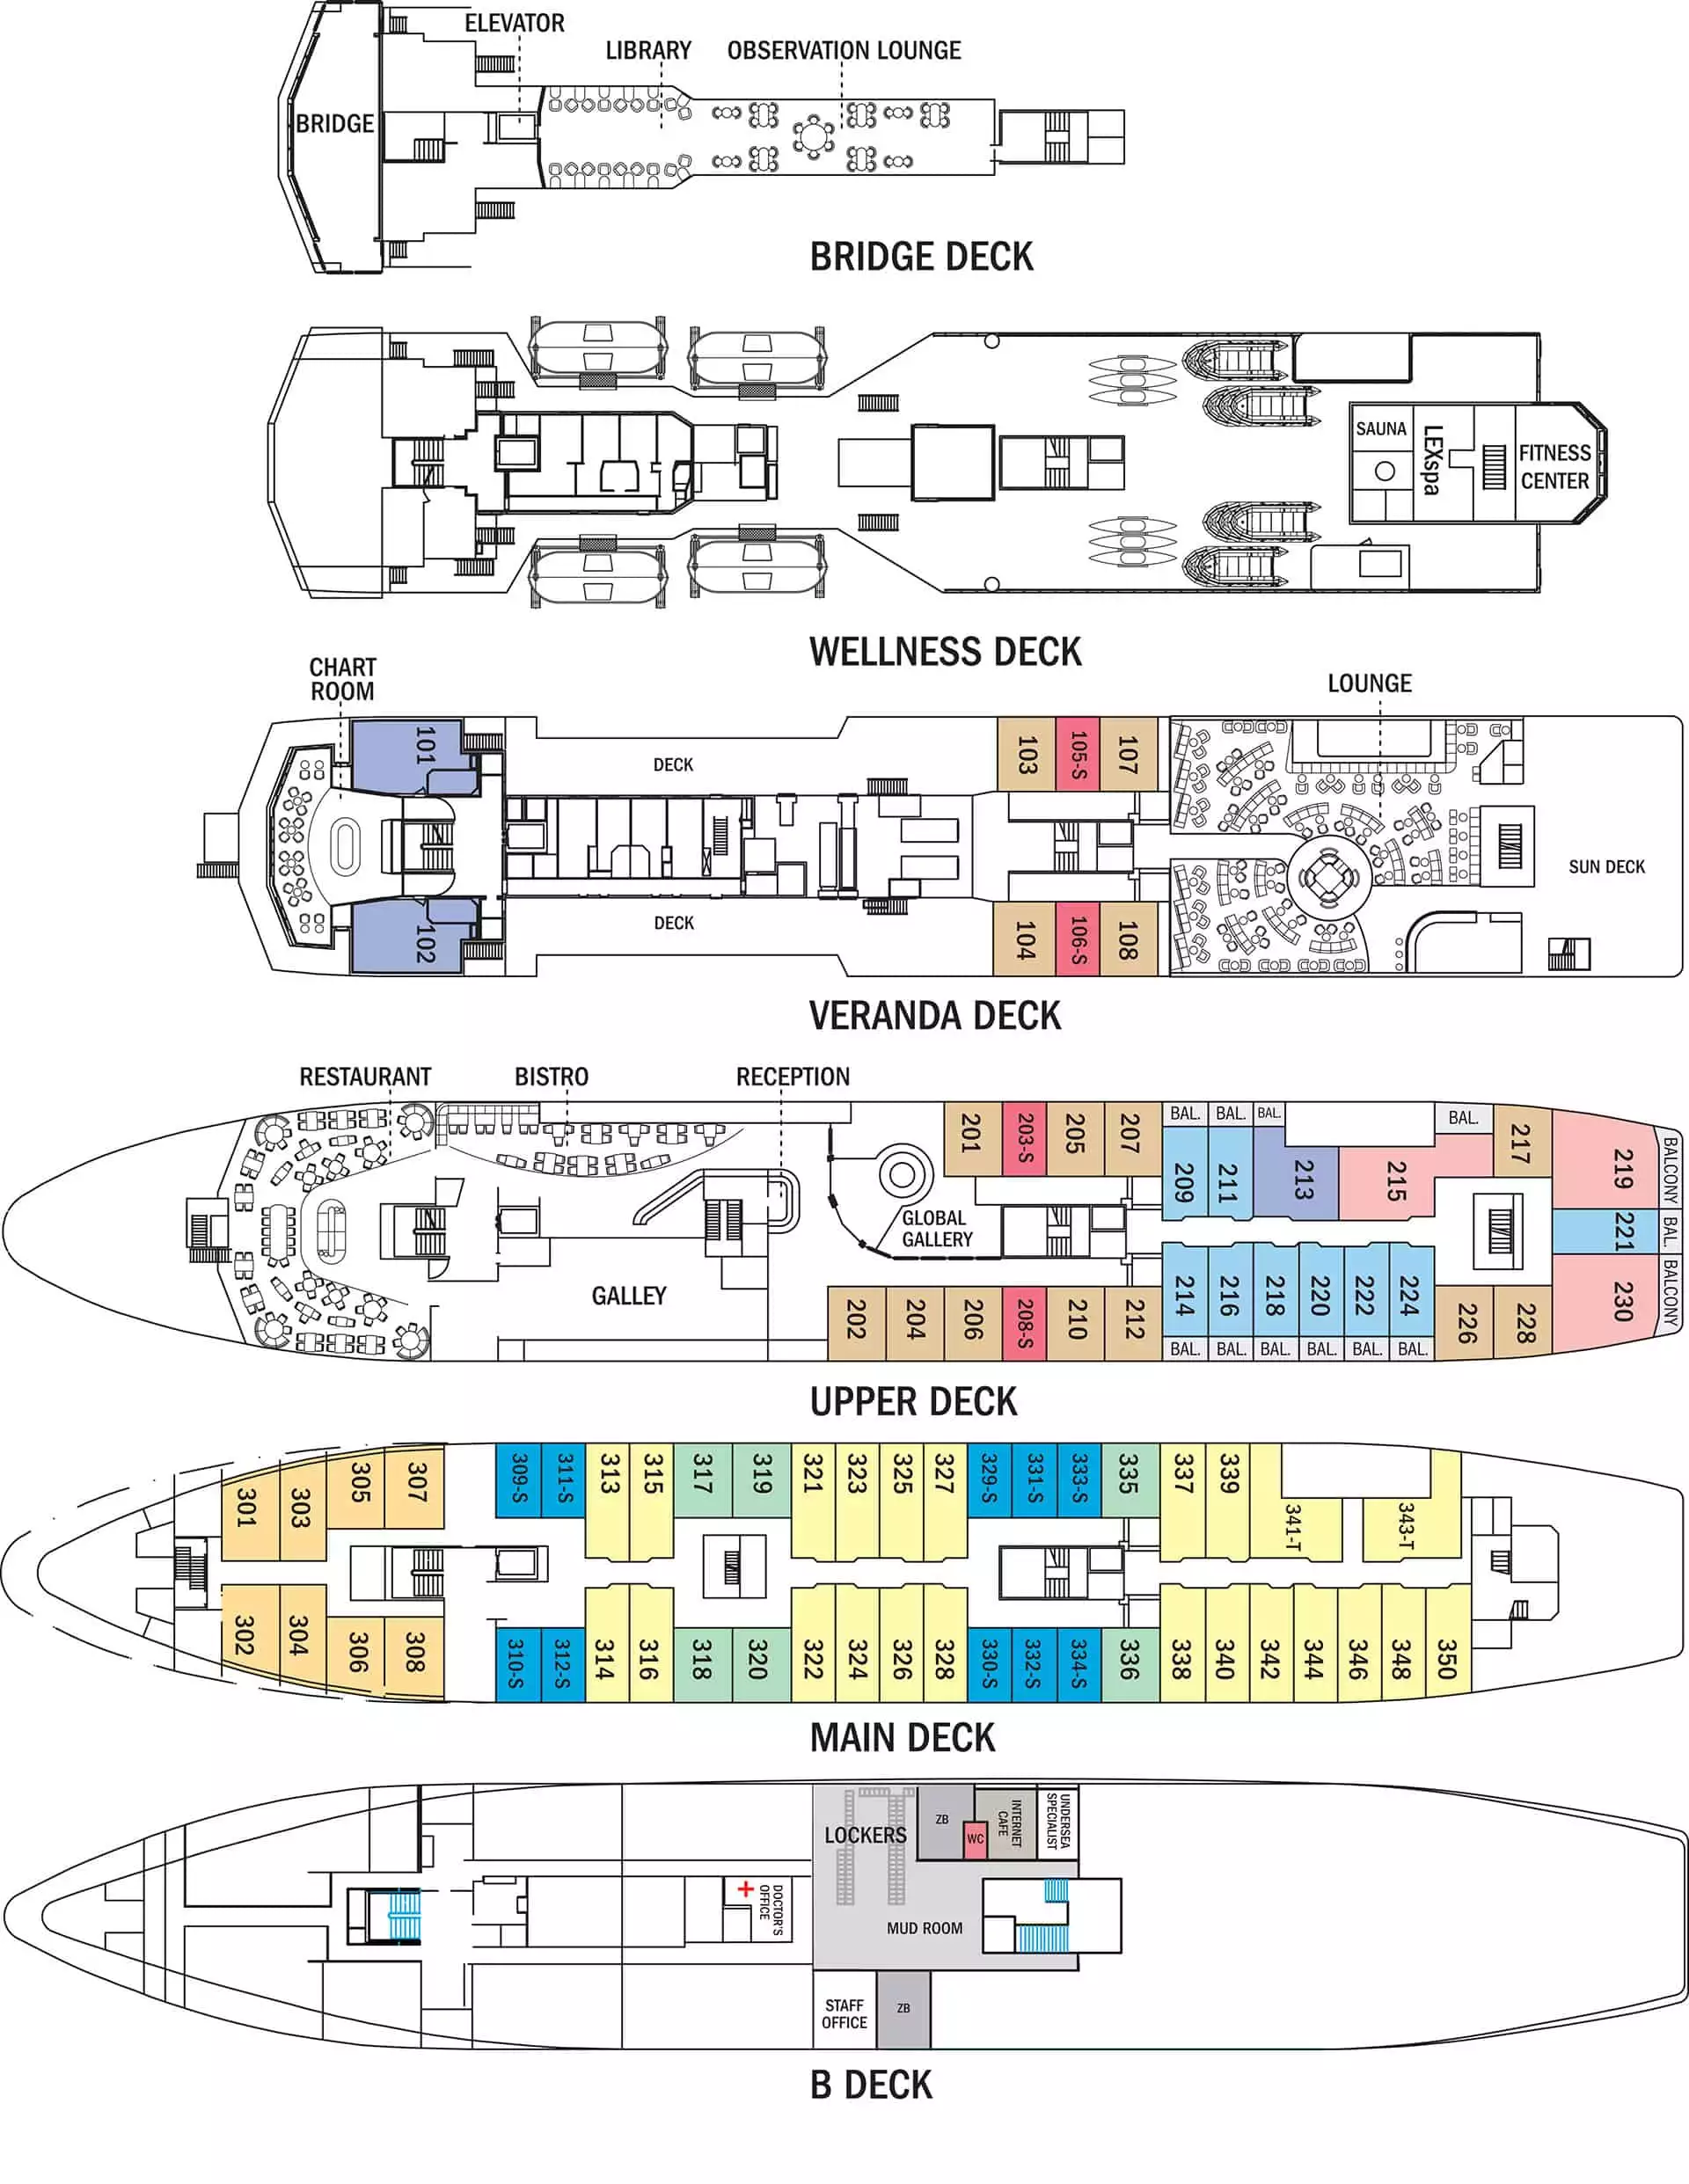 Deck plan detailing B Deck, Main Deck, Upper Deck, Veranda Deck, Wellness Deck and Bridge Deck of National Geographic Explorer polar expedition ship